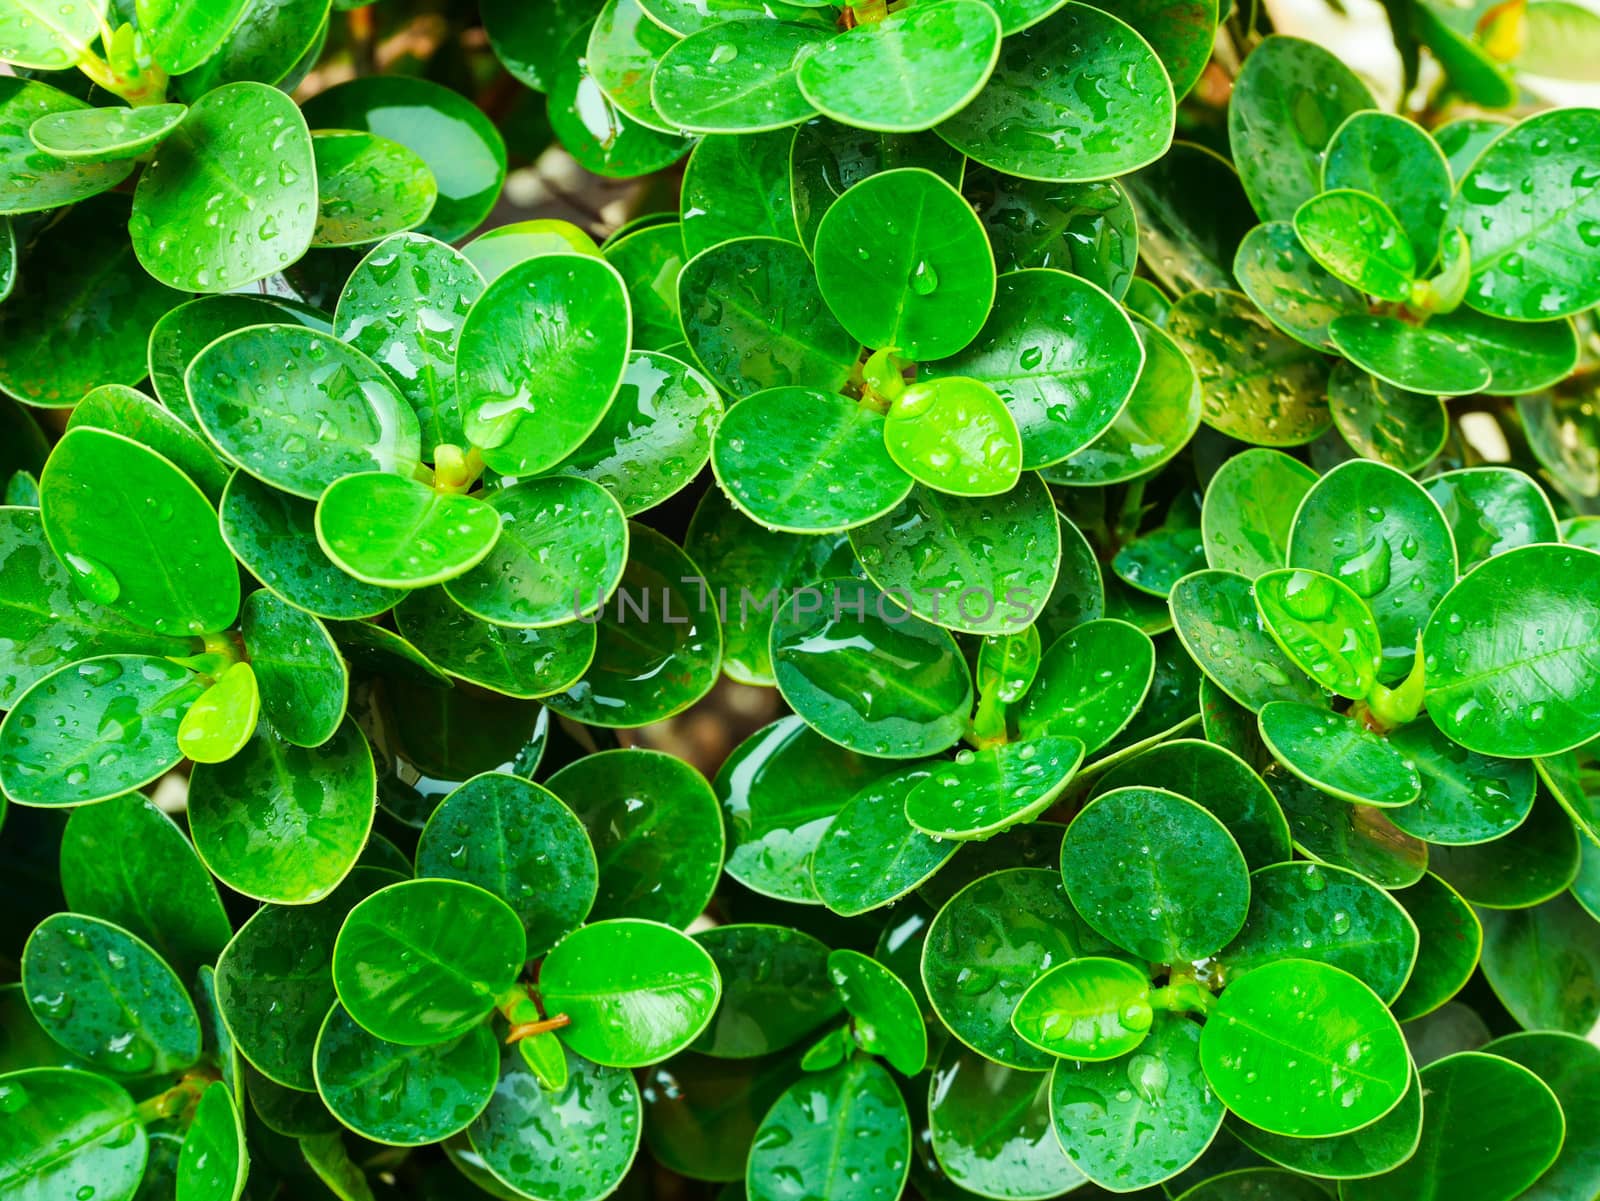 Green leaf and dewdrop background